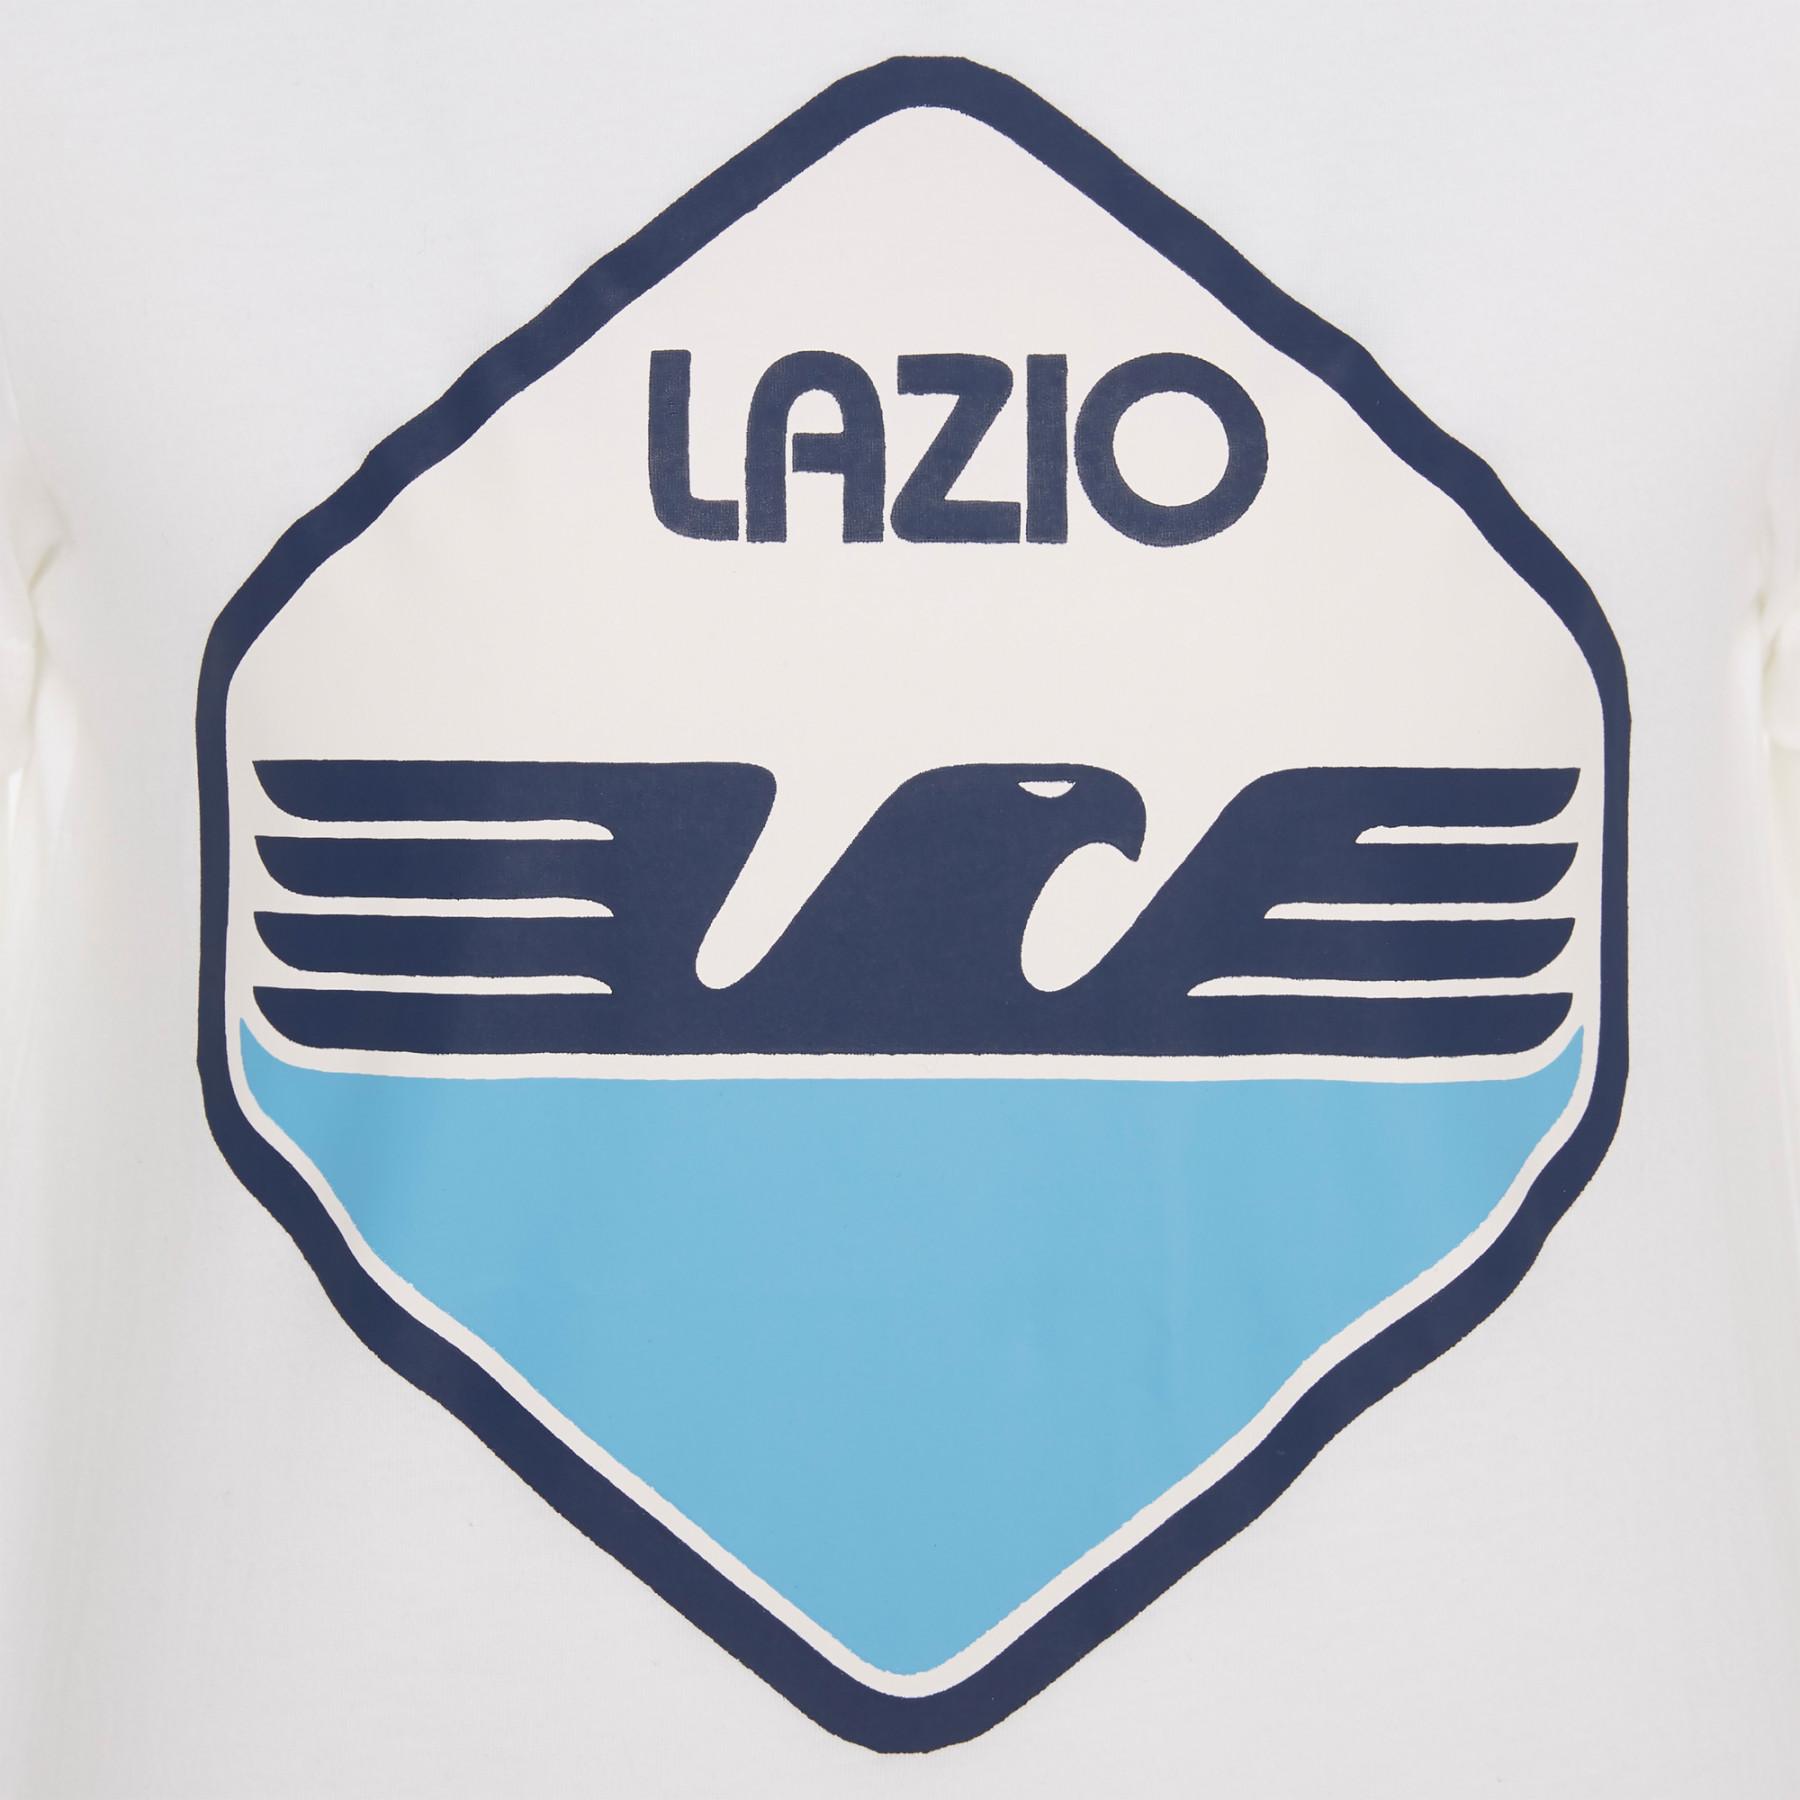 Camiseta para niños Lazio Rome Tifoso